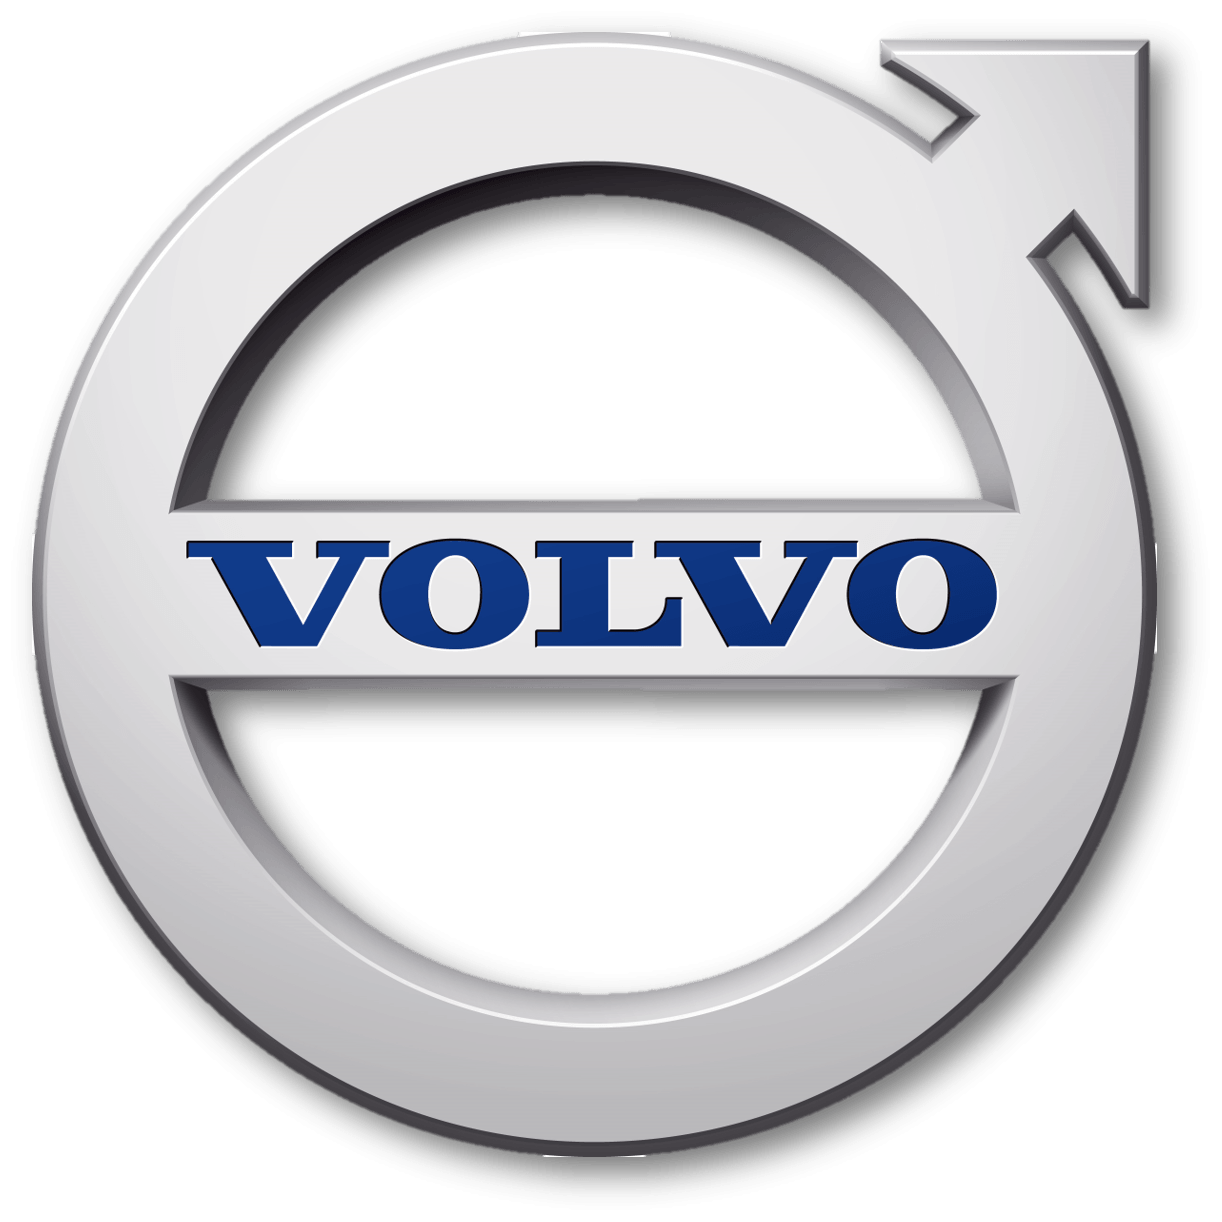  Volvo  Construction Equipment Logo  LogoDix